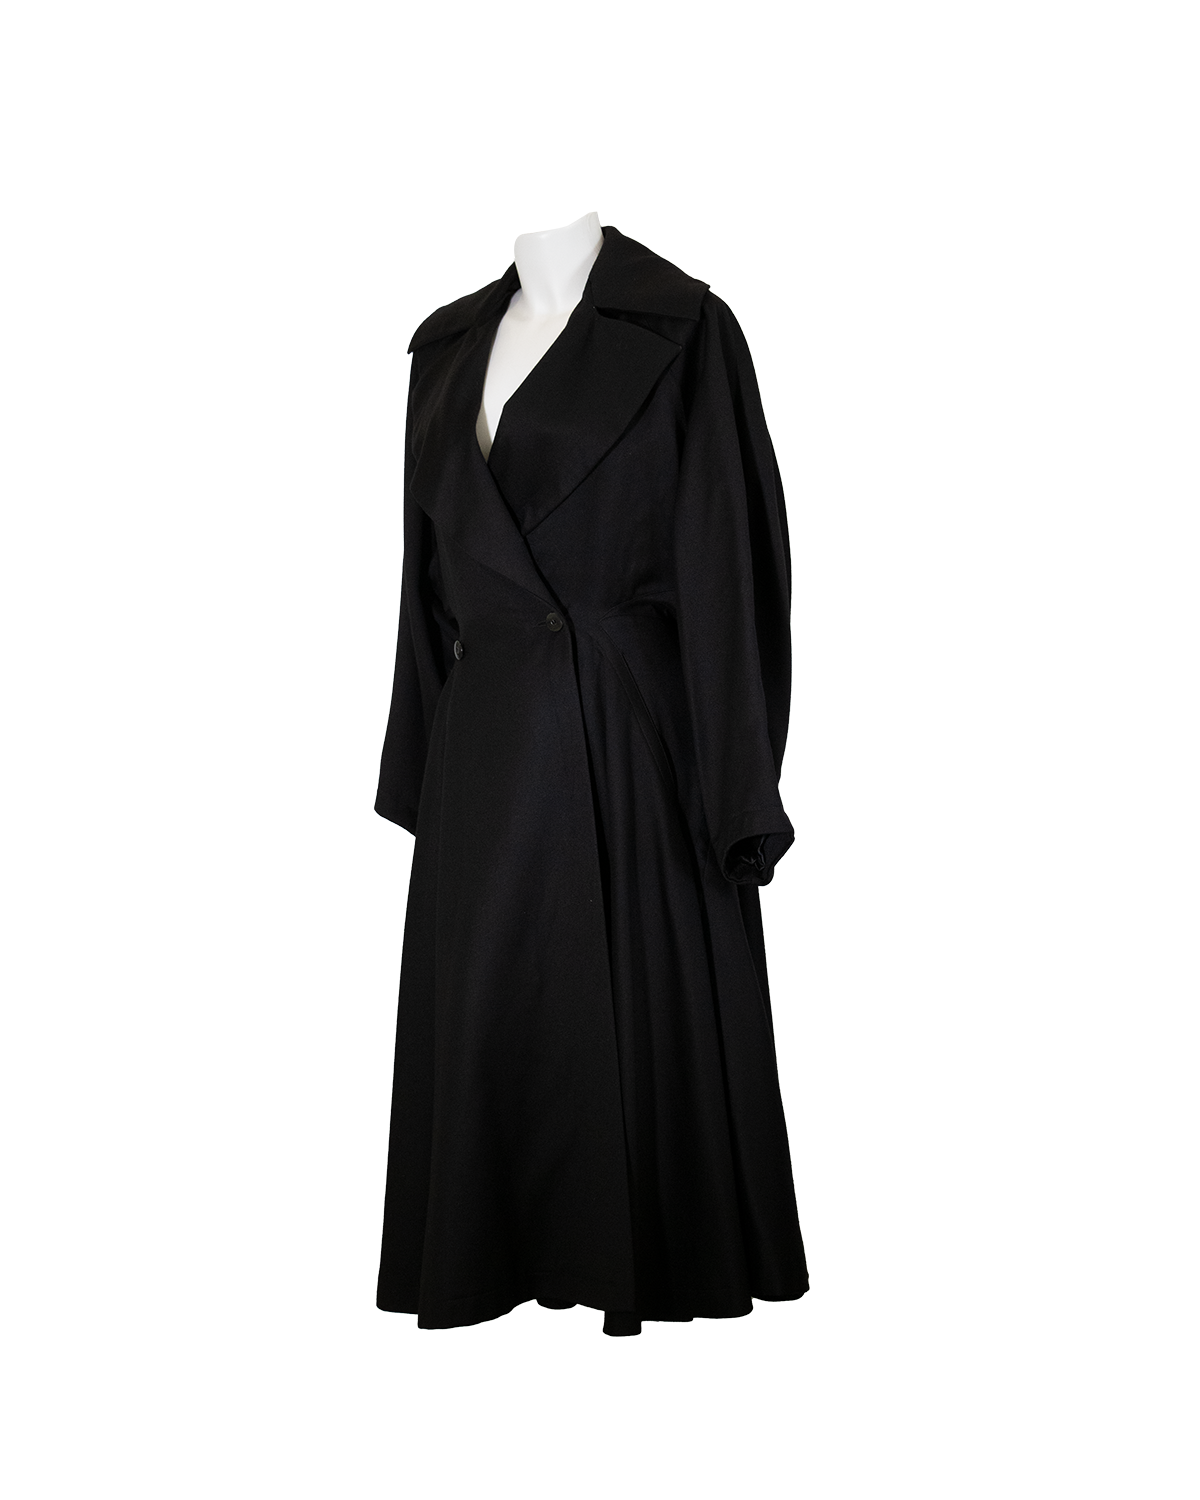 Azzedine Alaia - Black Wool Coat FW 1985-1986